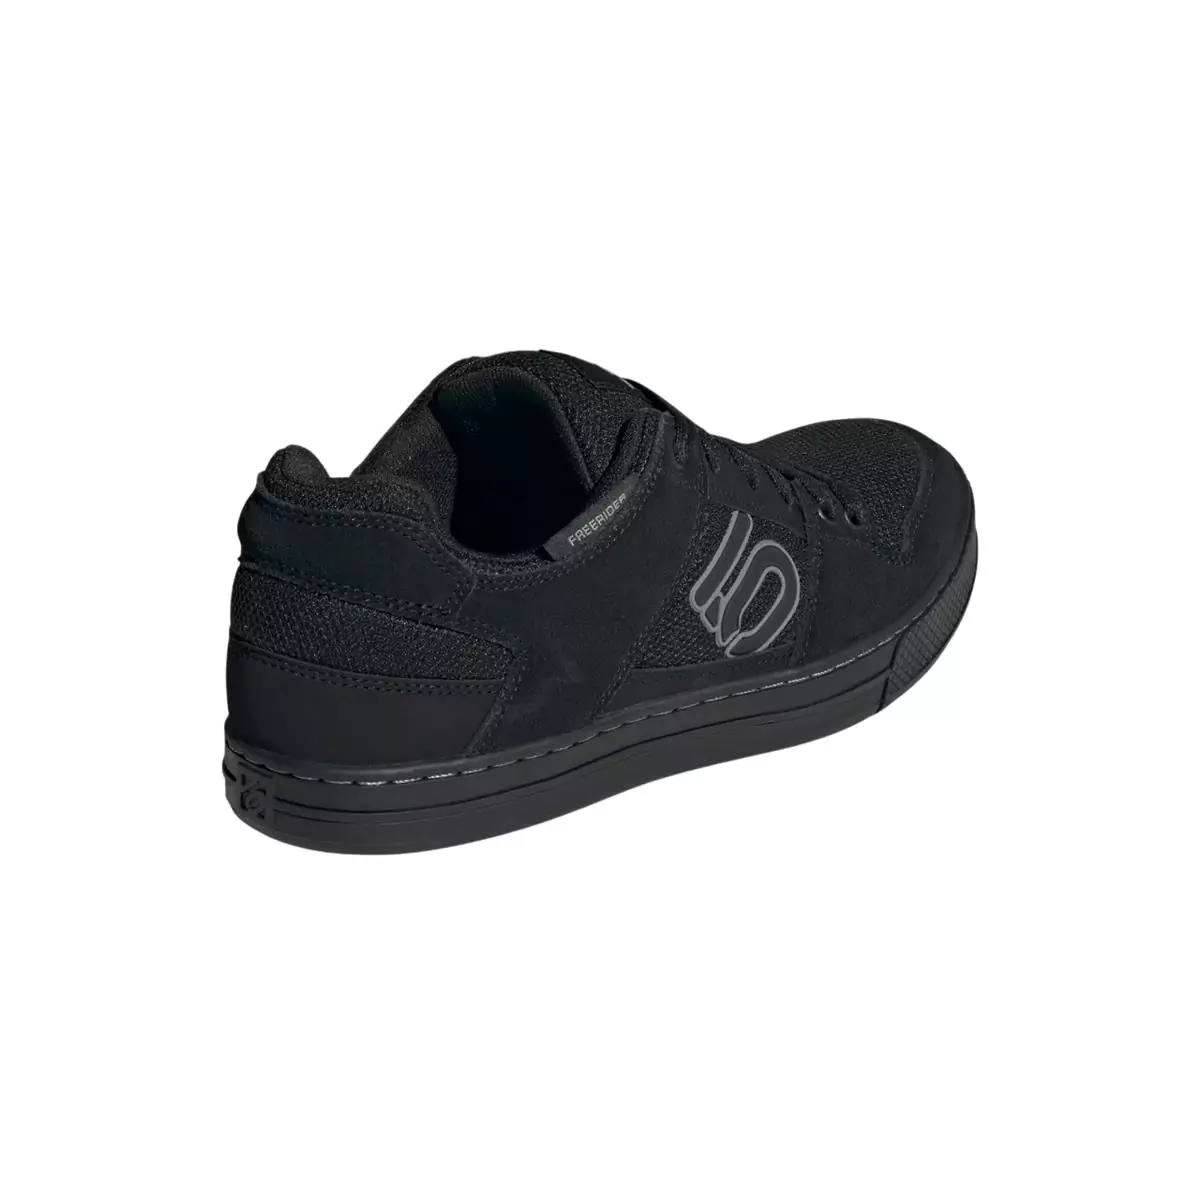 MTB Shoes Flat Freerider Black Size 41 #5